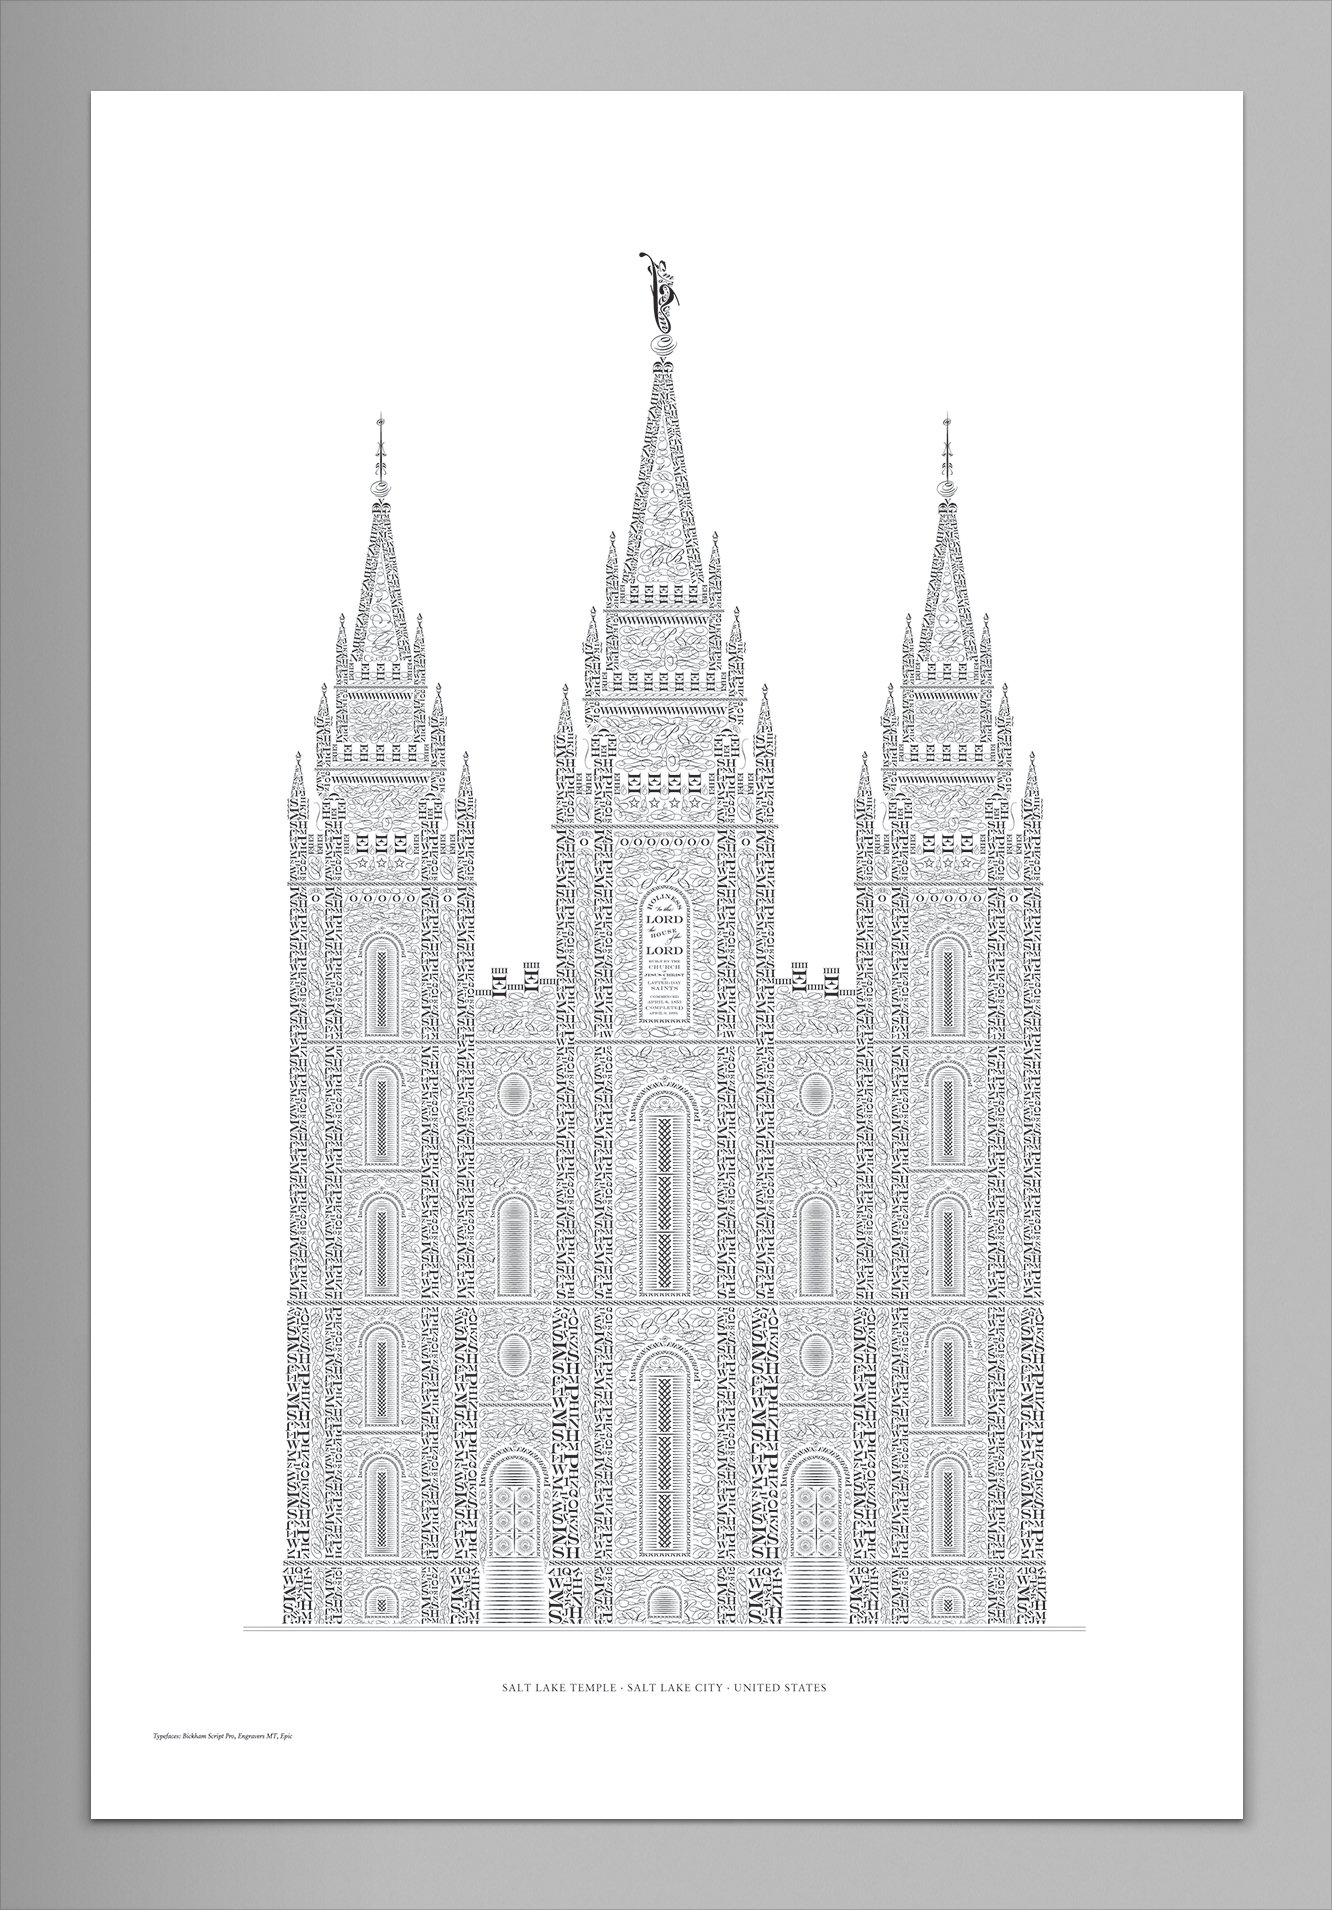 Image of Salt Lake Temple in Type